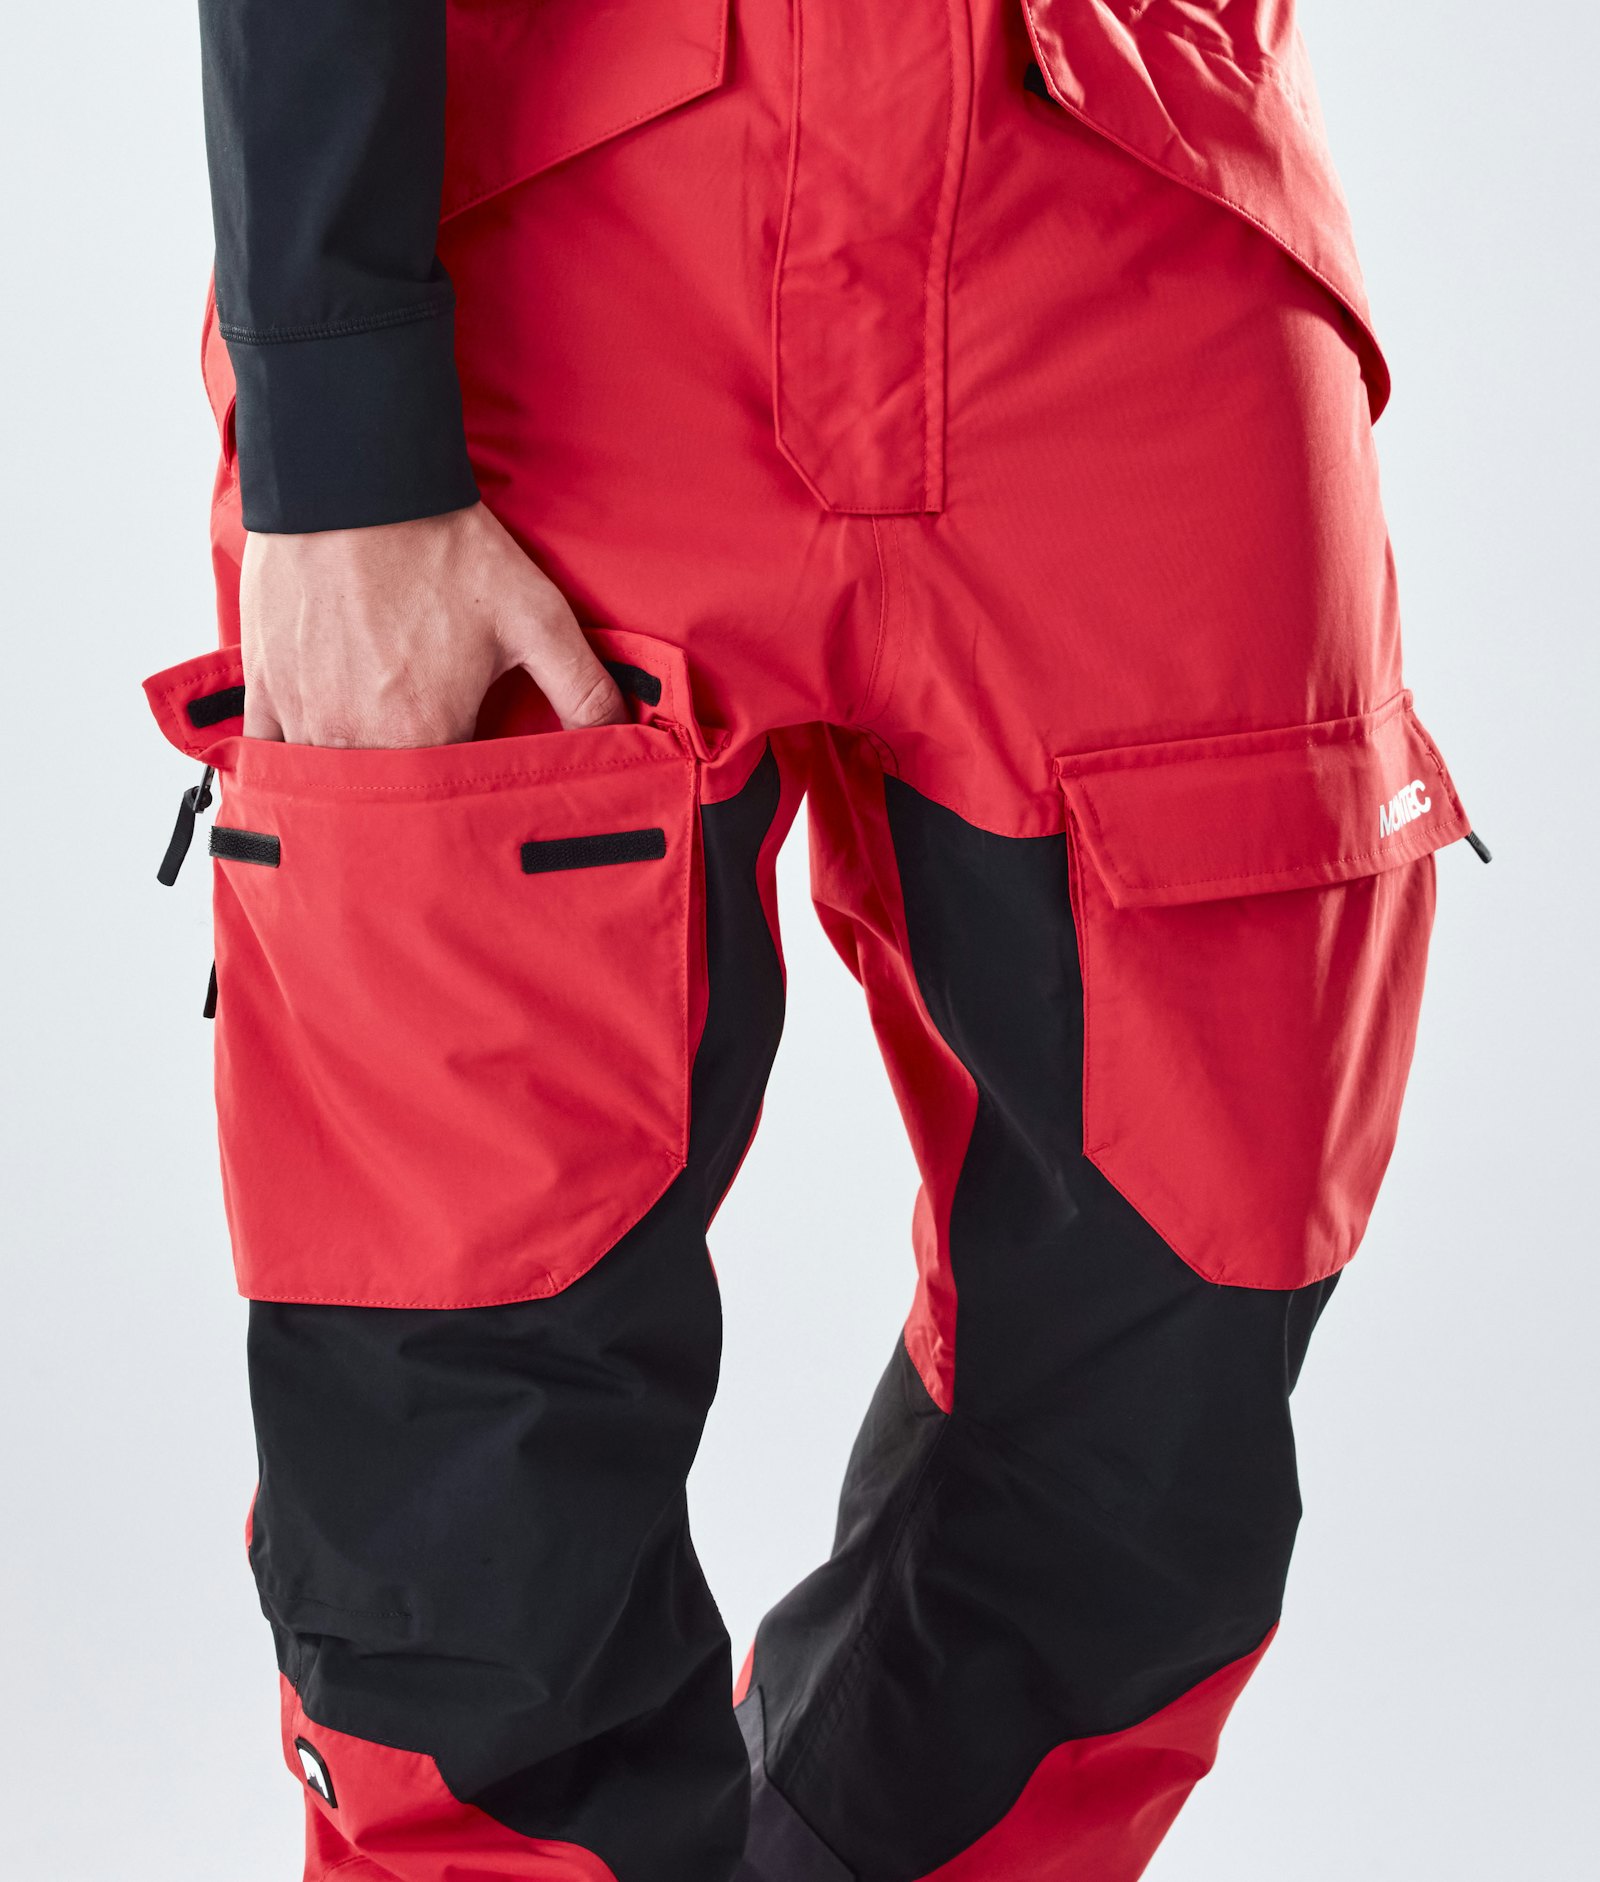 Fawk 2020 Snowboard Pants Men Red/Black Renewed, Image 6 of 6